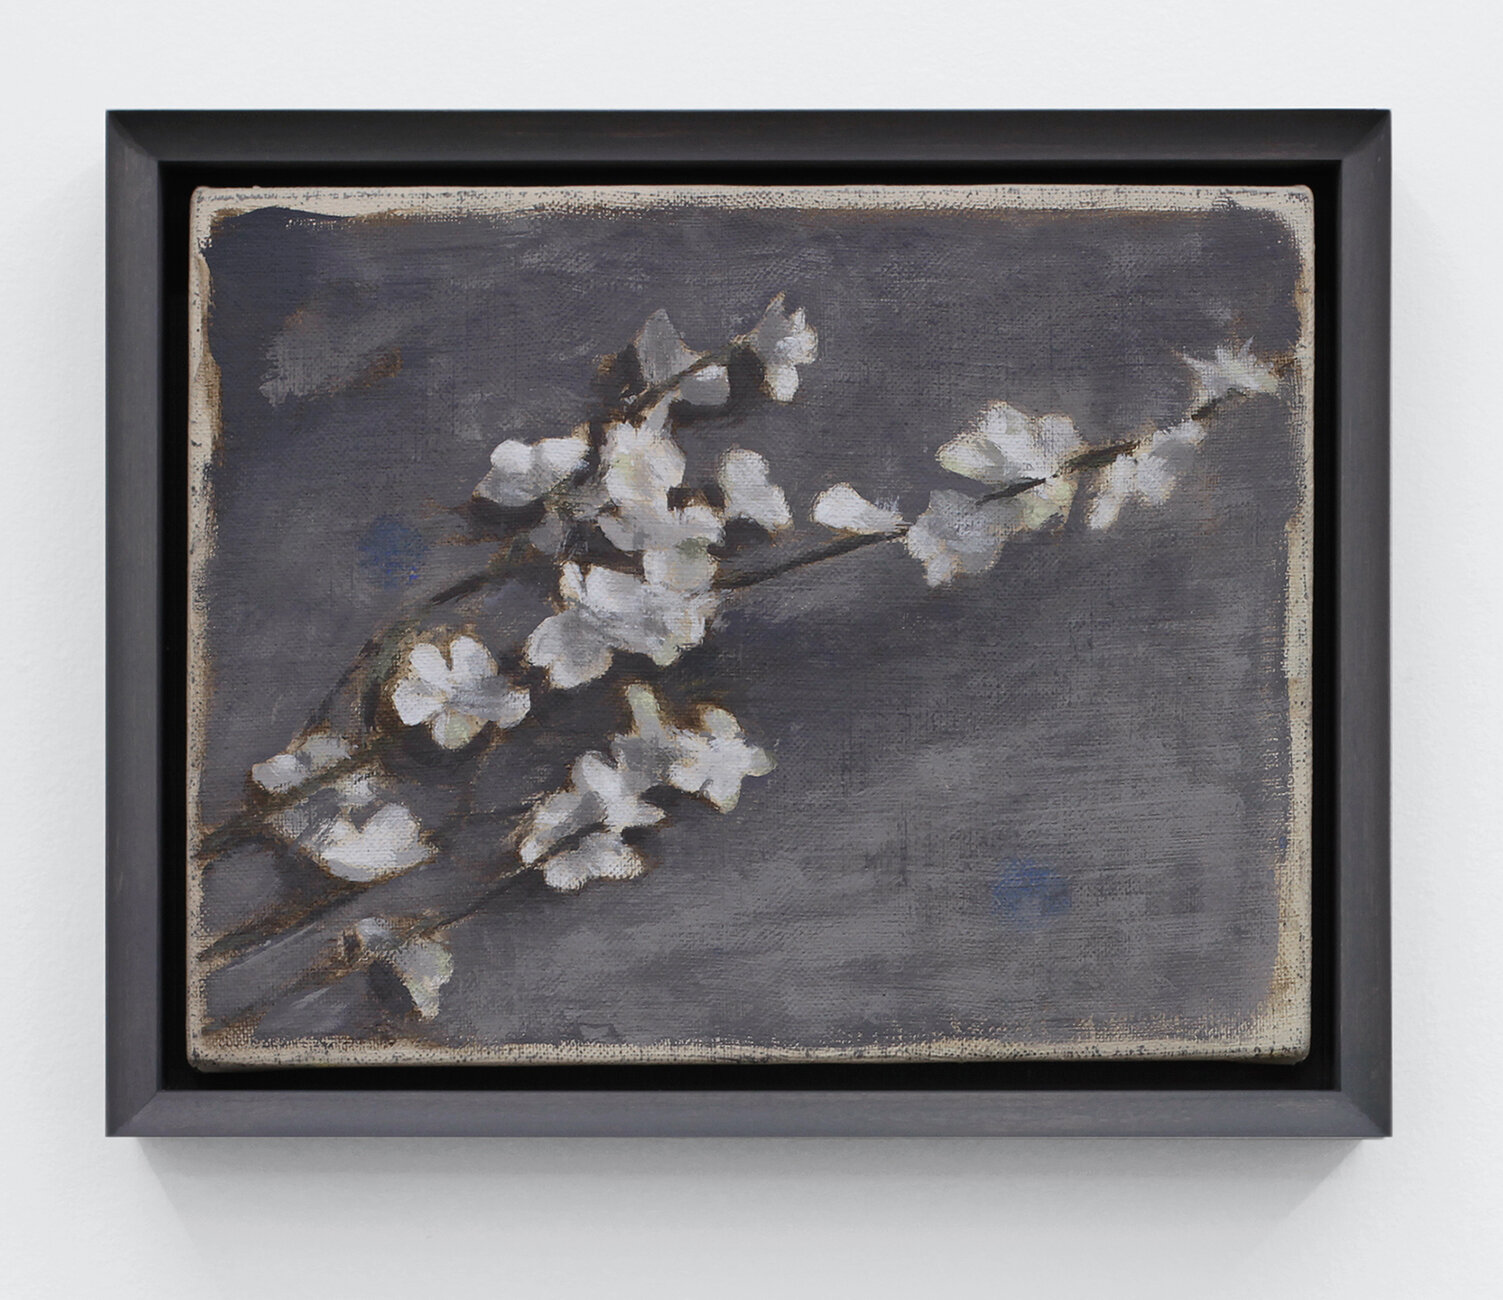  Flowers (Studio Floor)  2018  Distemper on canvas  7 x 9 inches  (17.78 x 22.86 cm)     